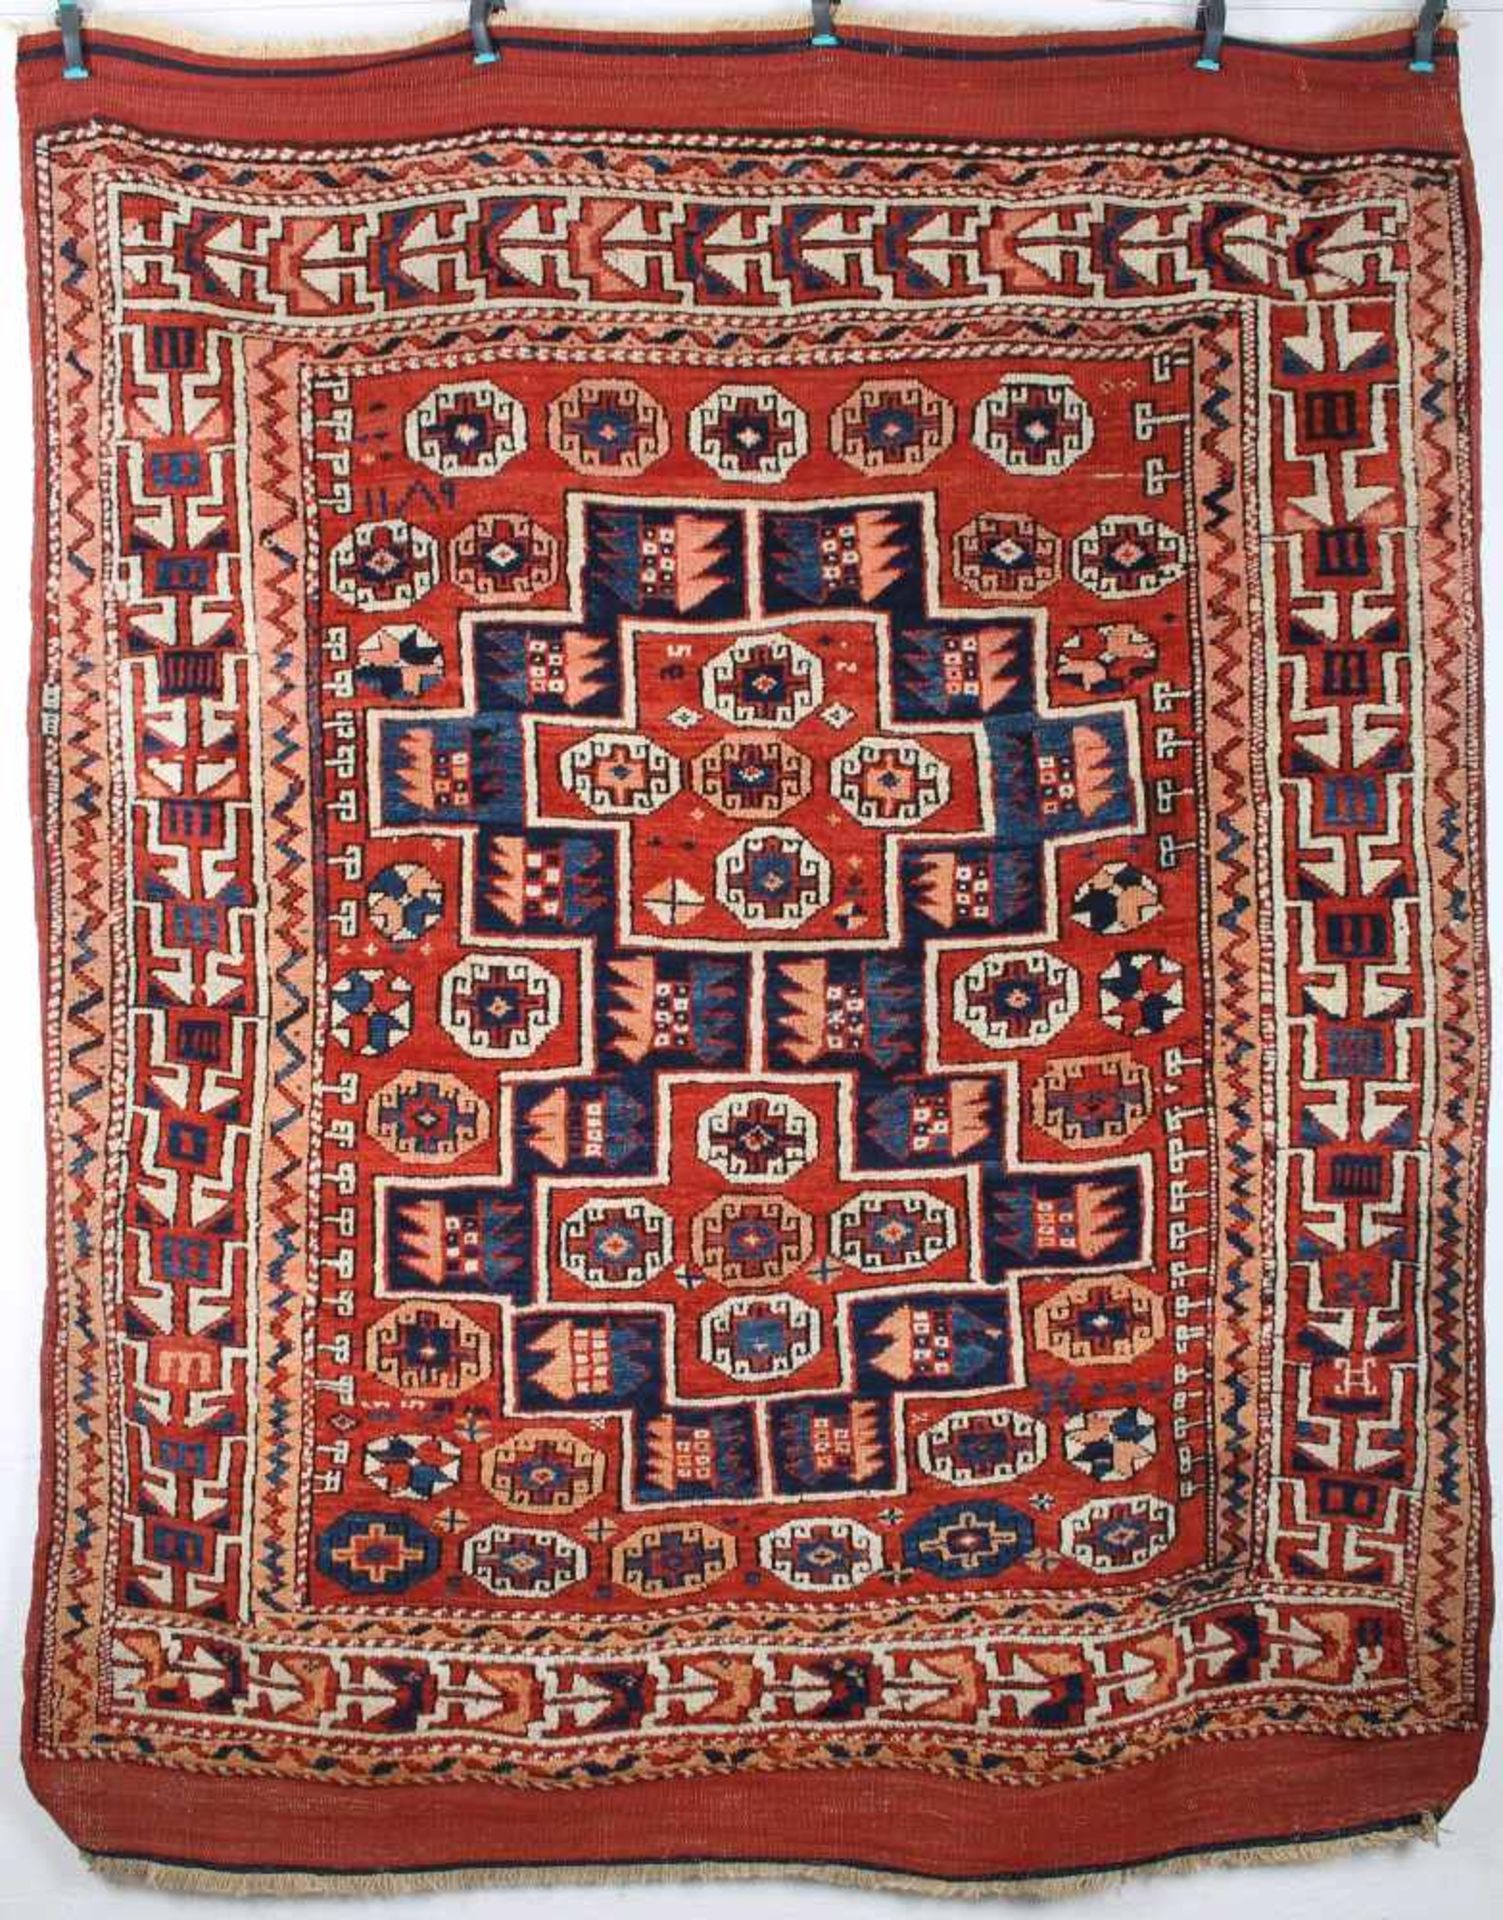 Antiker Bergama Türkei Teppich, antique turk carpet,